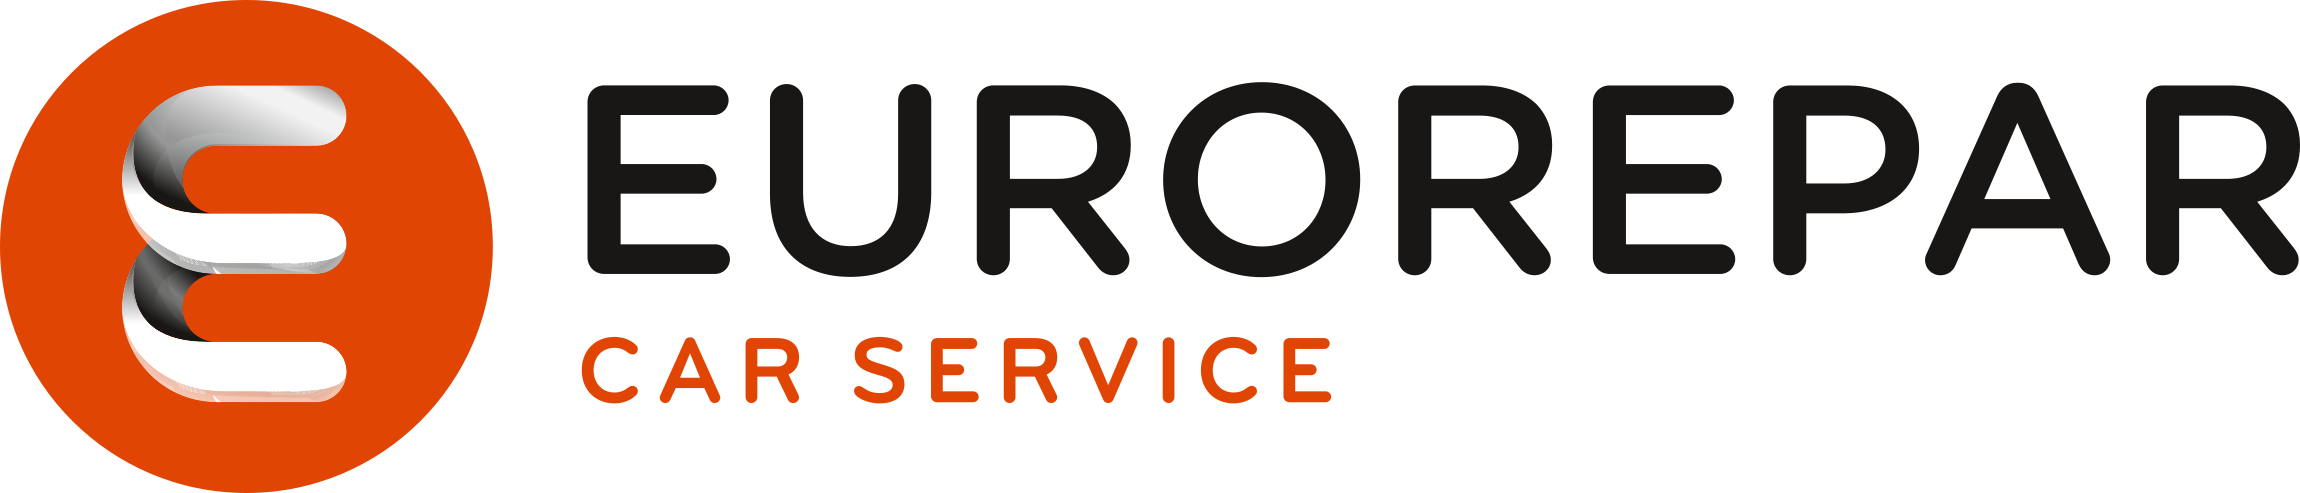 new logo eurorepar